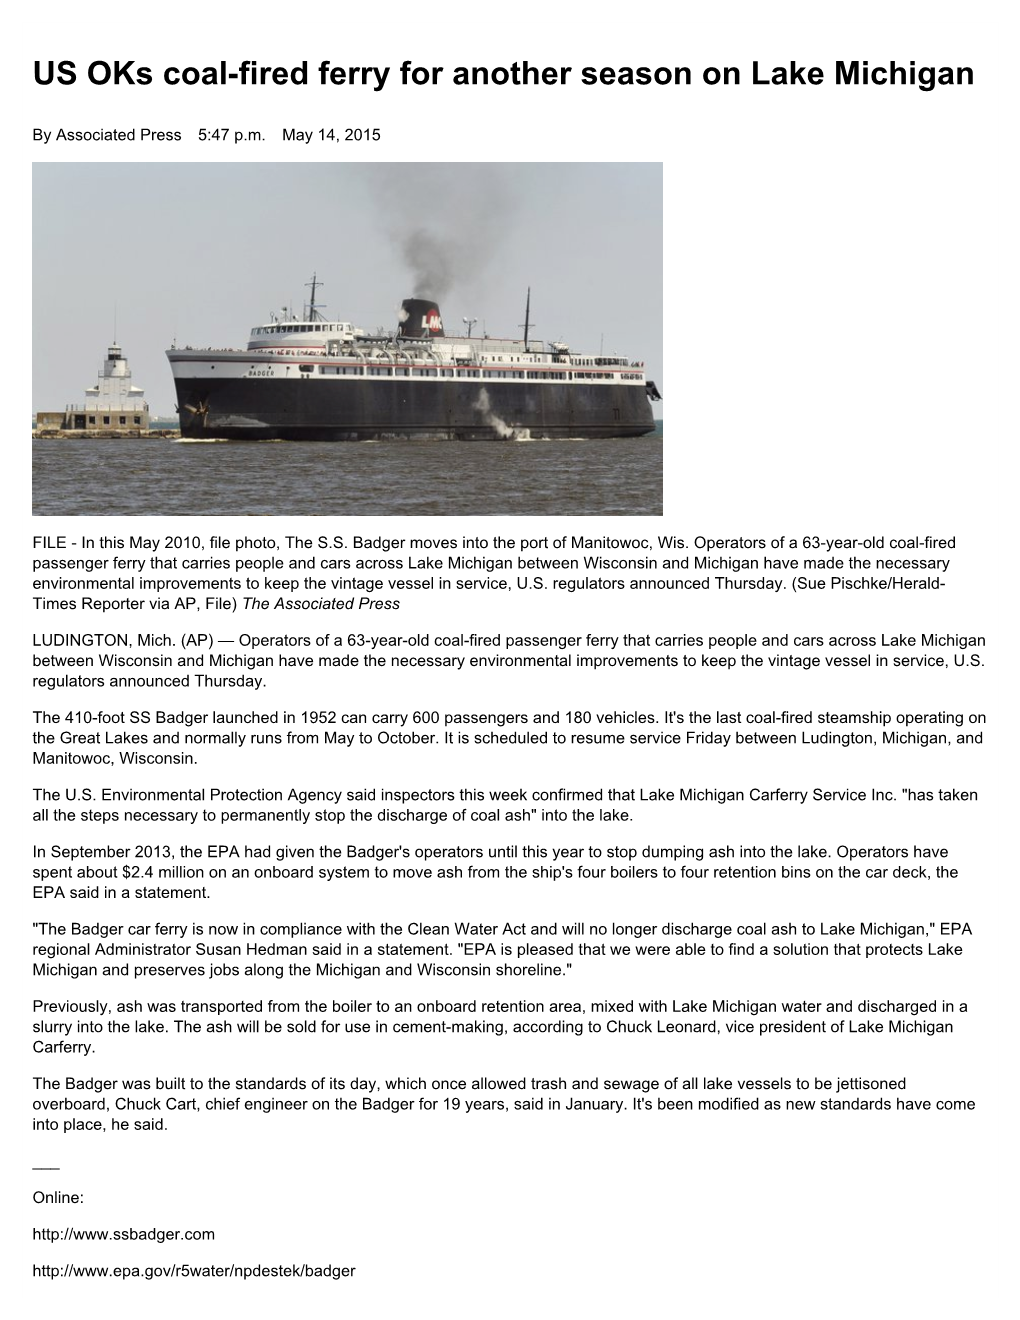 US Oks Coalfired Ferry for Another Season on Lake Michigan